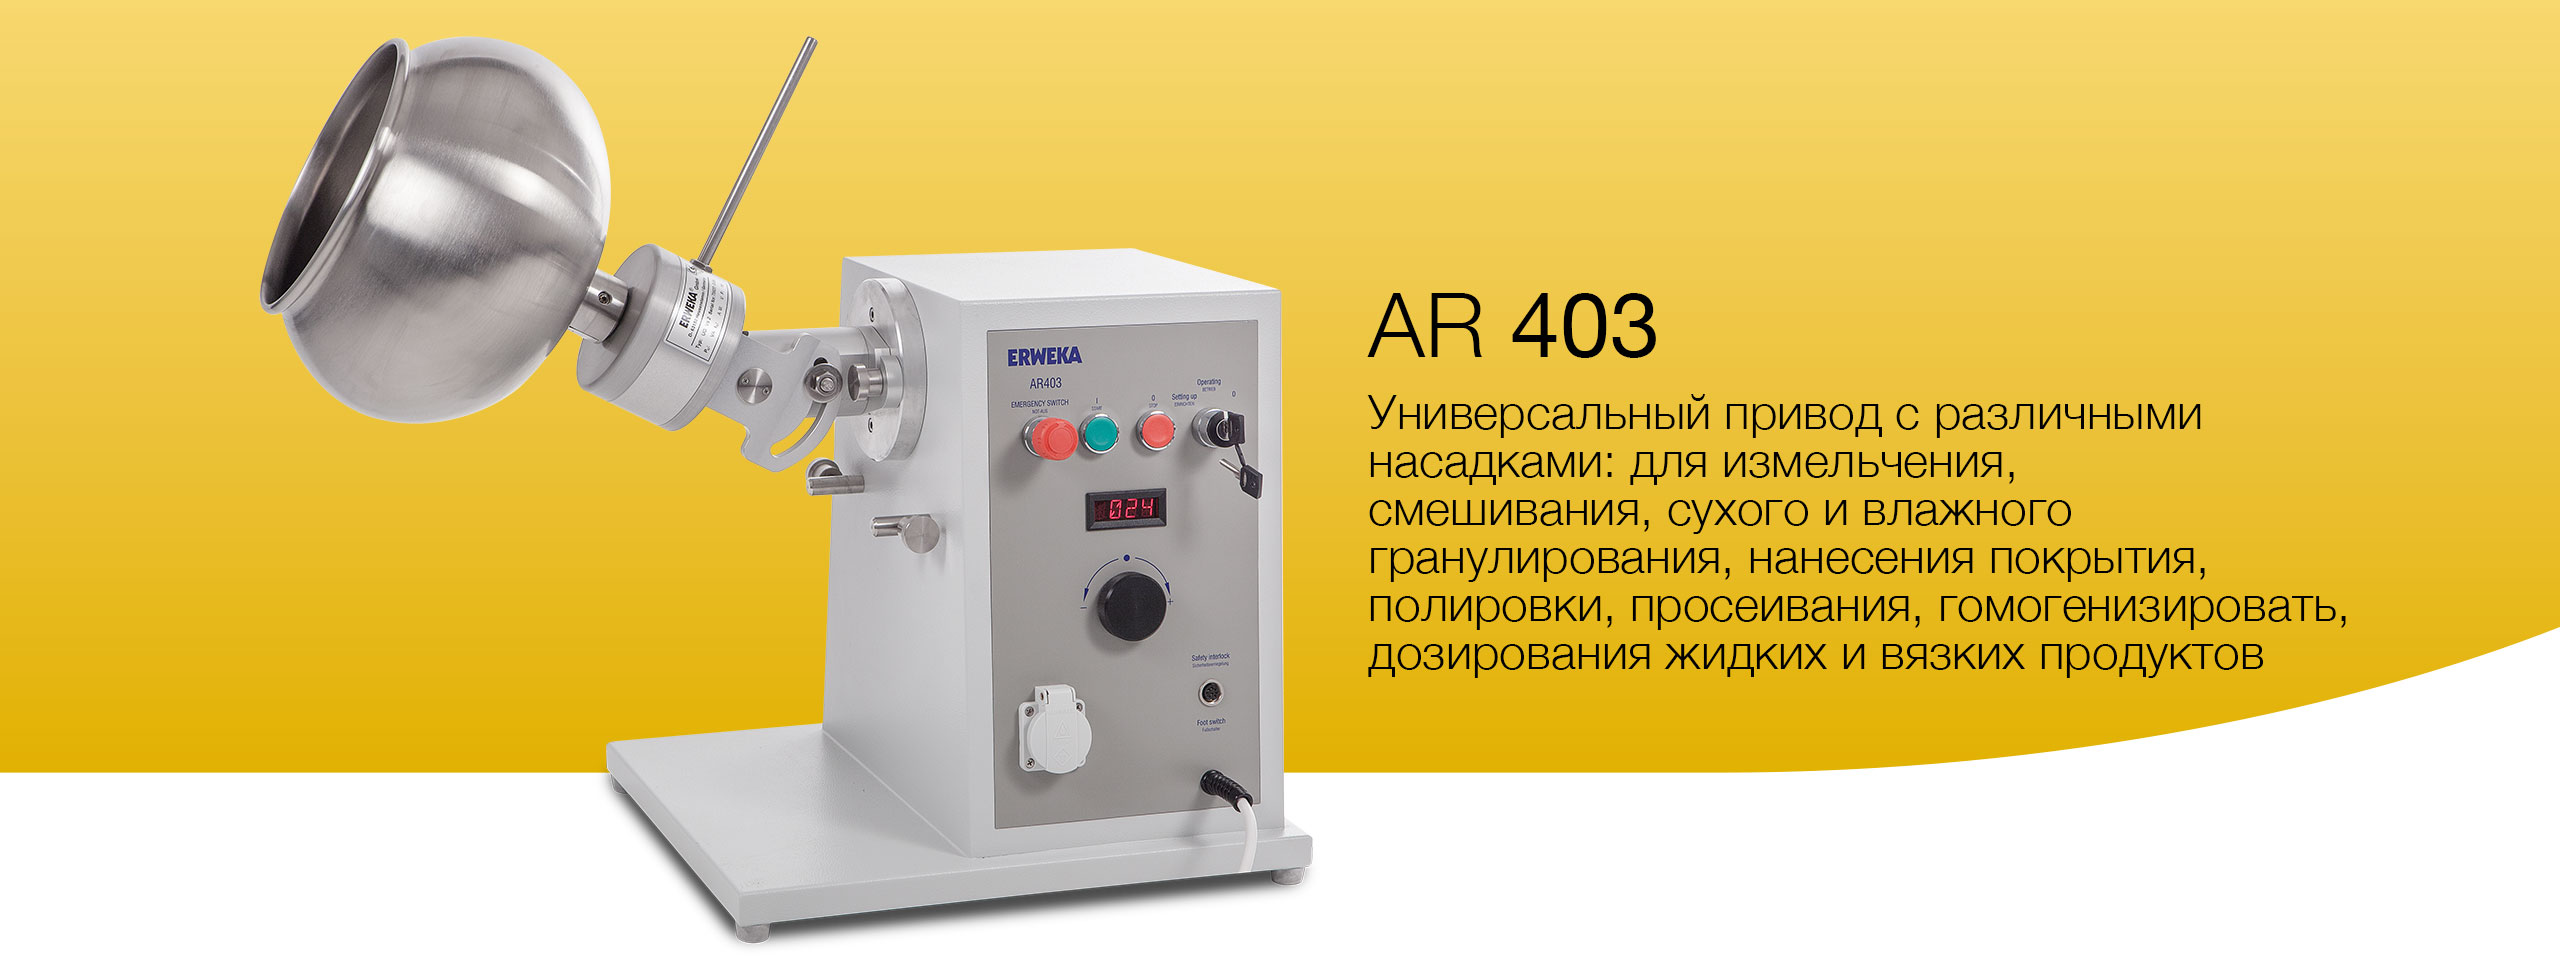 Ar403 RUS